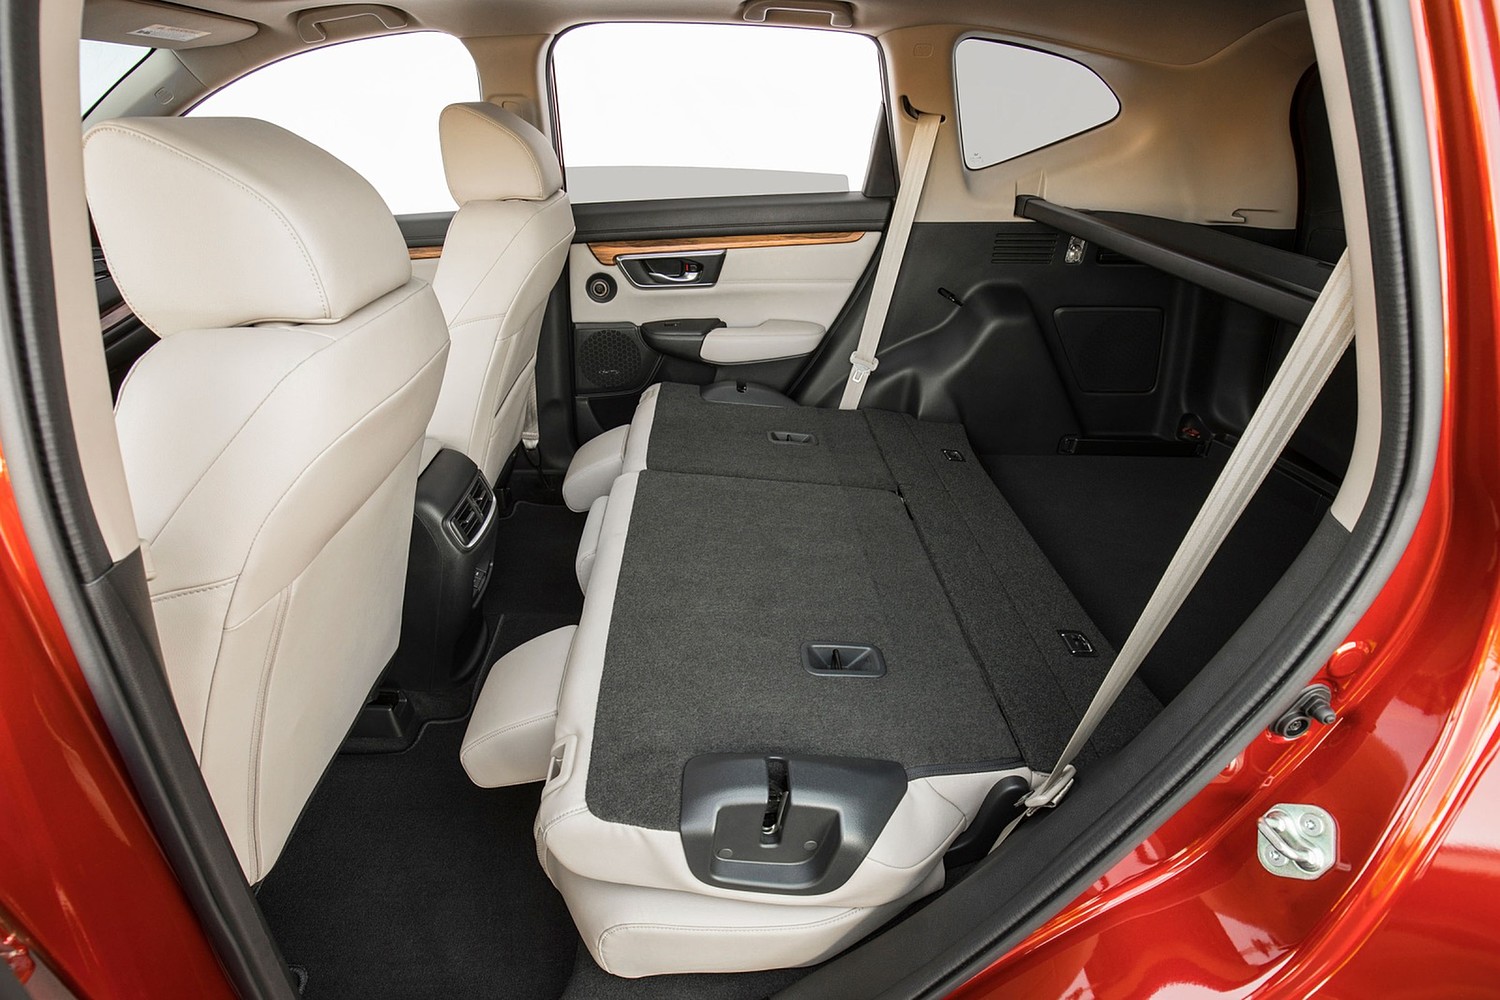 Honda CR-V Touring 4dr SUV Interior (2017 model year shown)